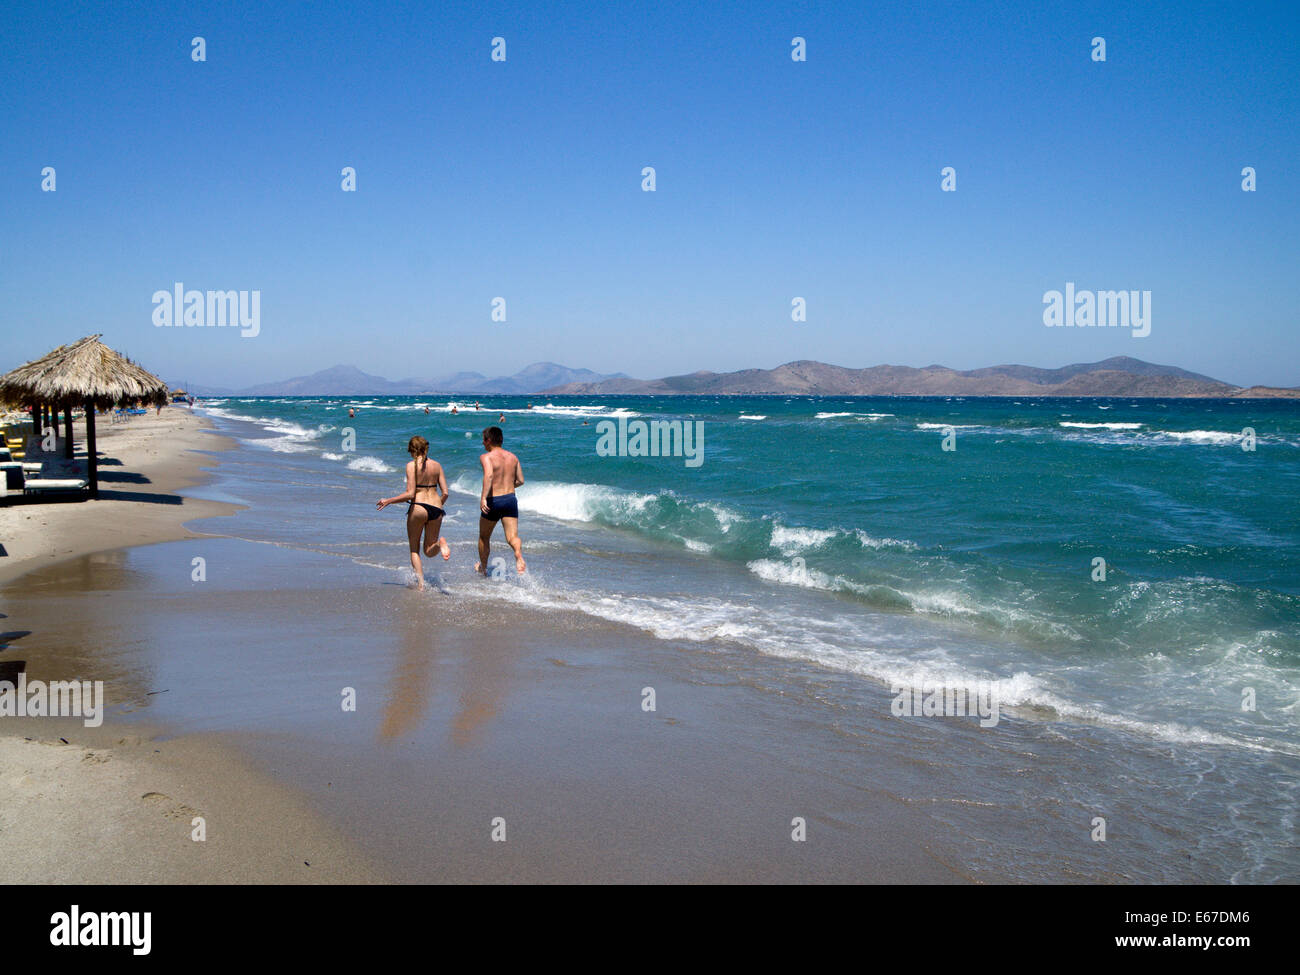 People running along Tingaki Beach, Tingaki, Kos Island, Greece. Stock Photo